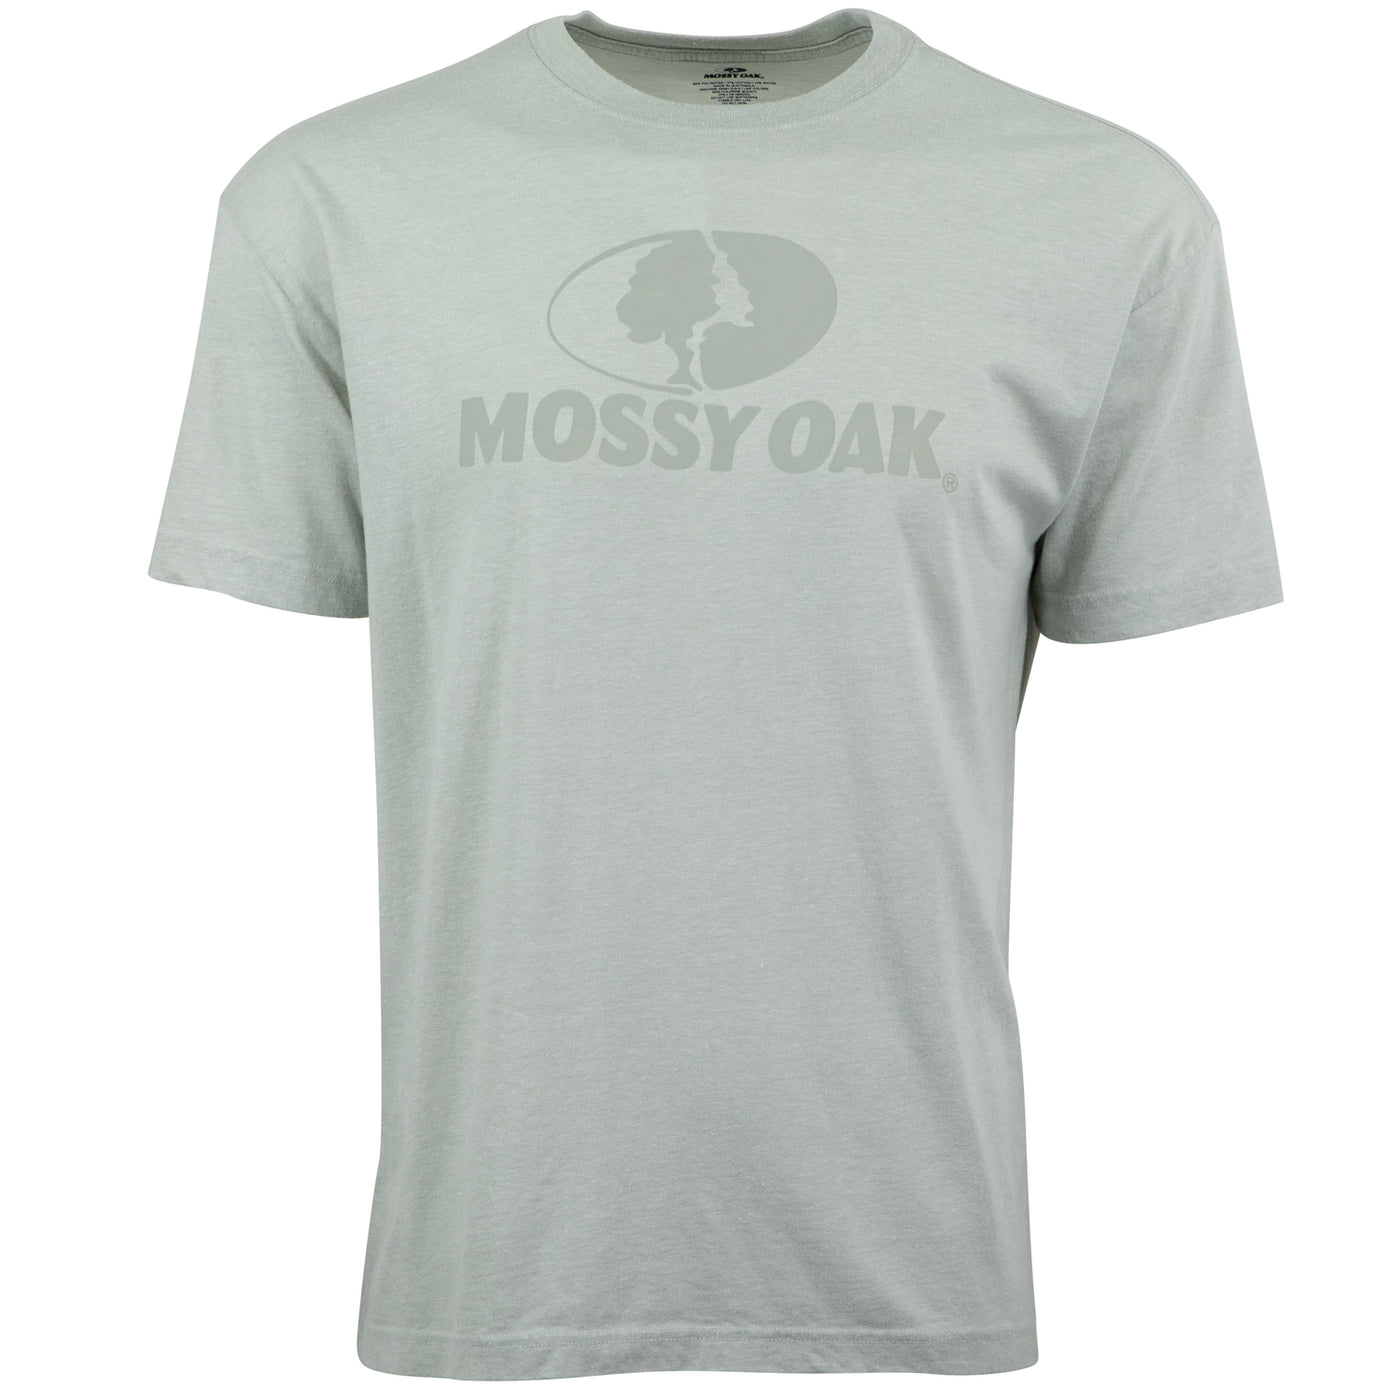 Mossy Oak Burnout Logo Tee Cool Grey